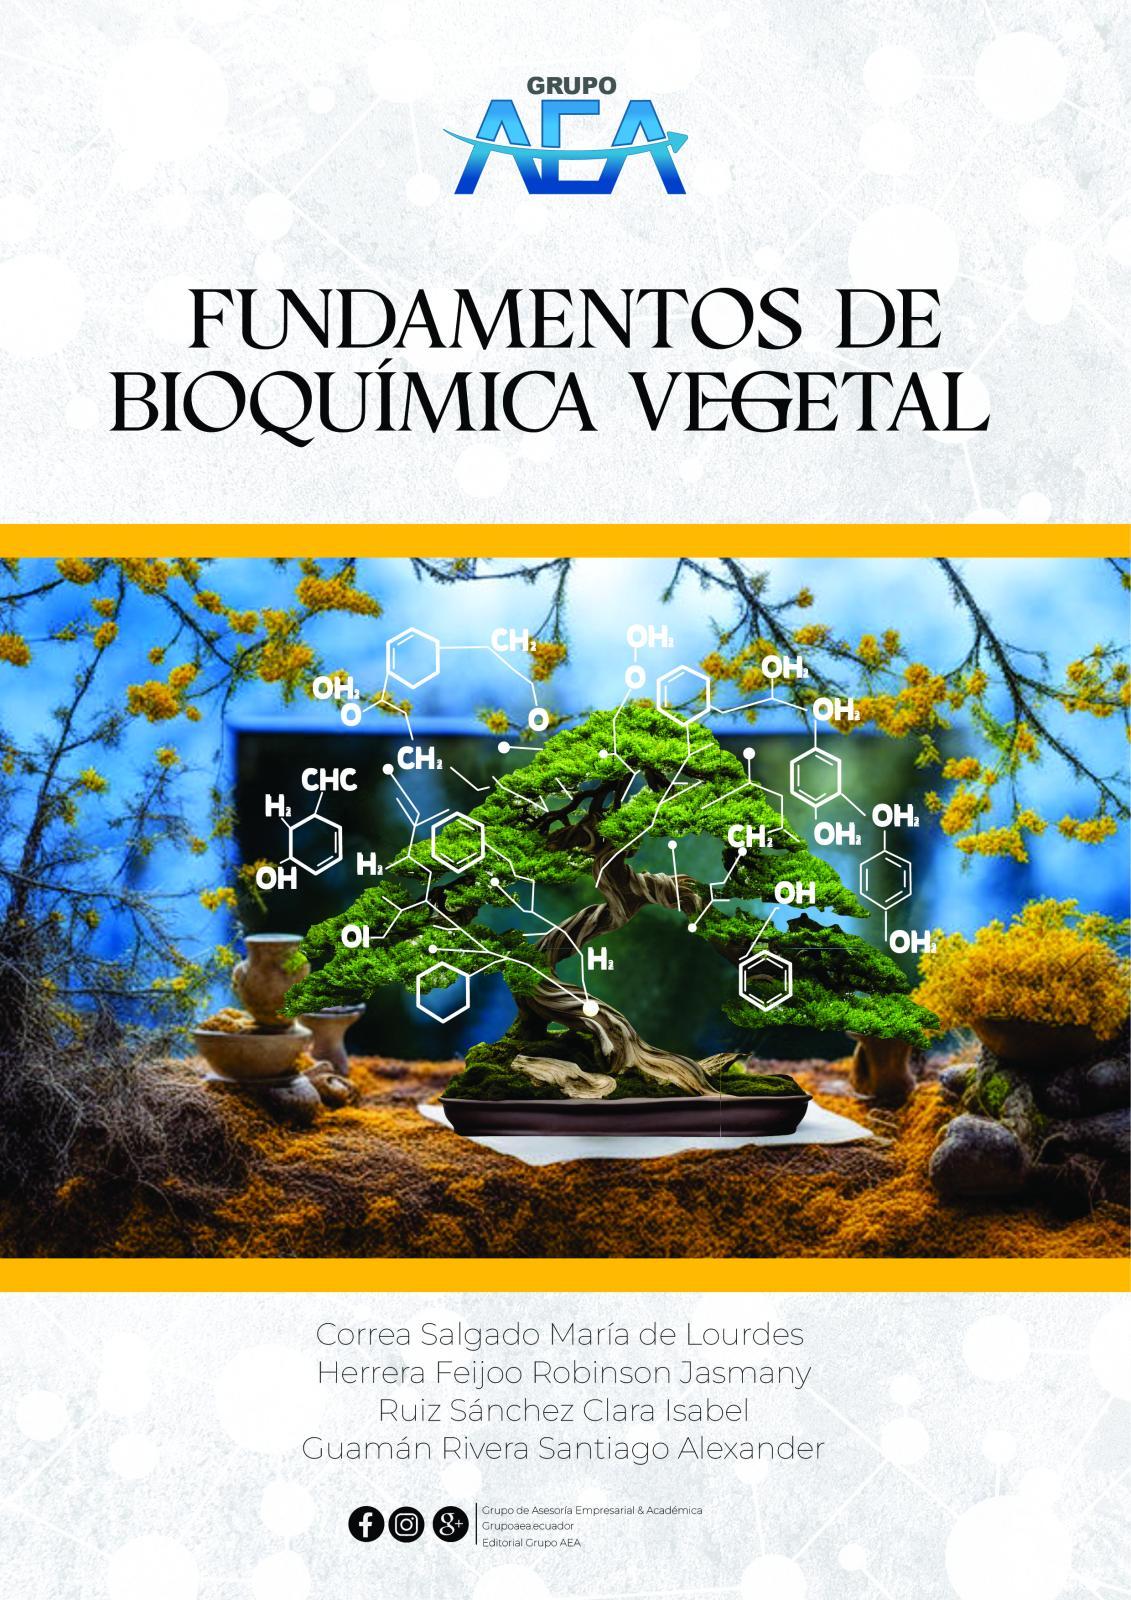 Read more about Fundamentos de Bioquímica Vegetal